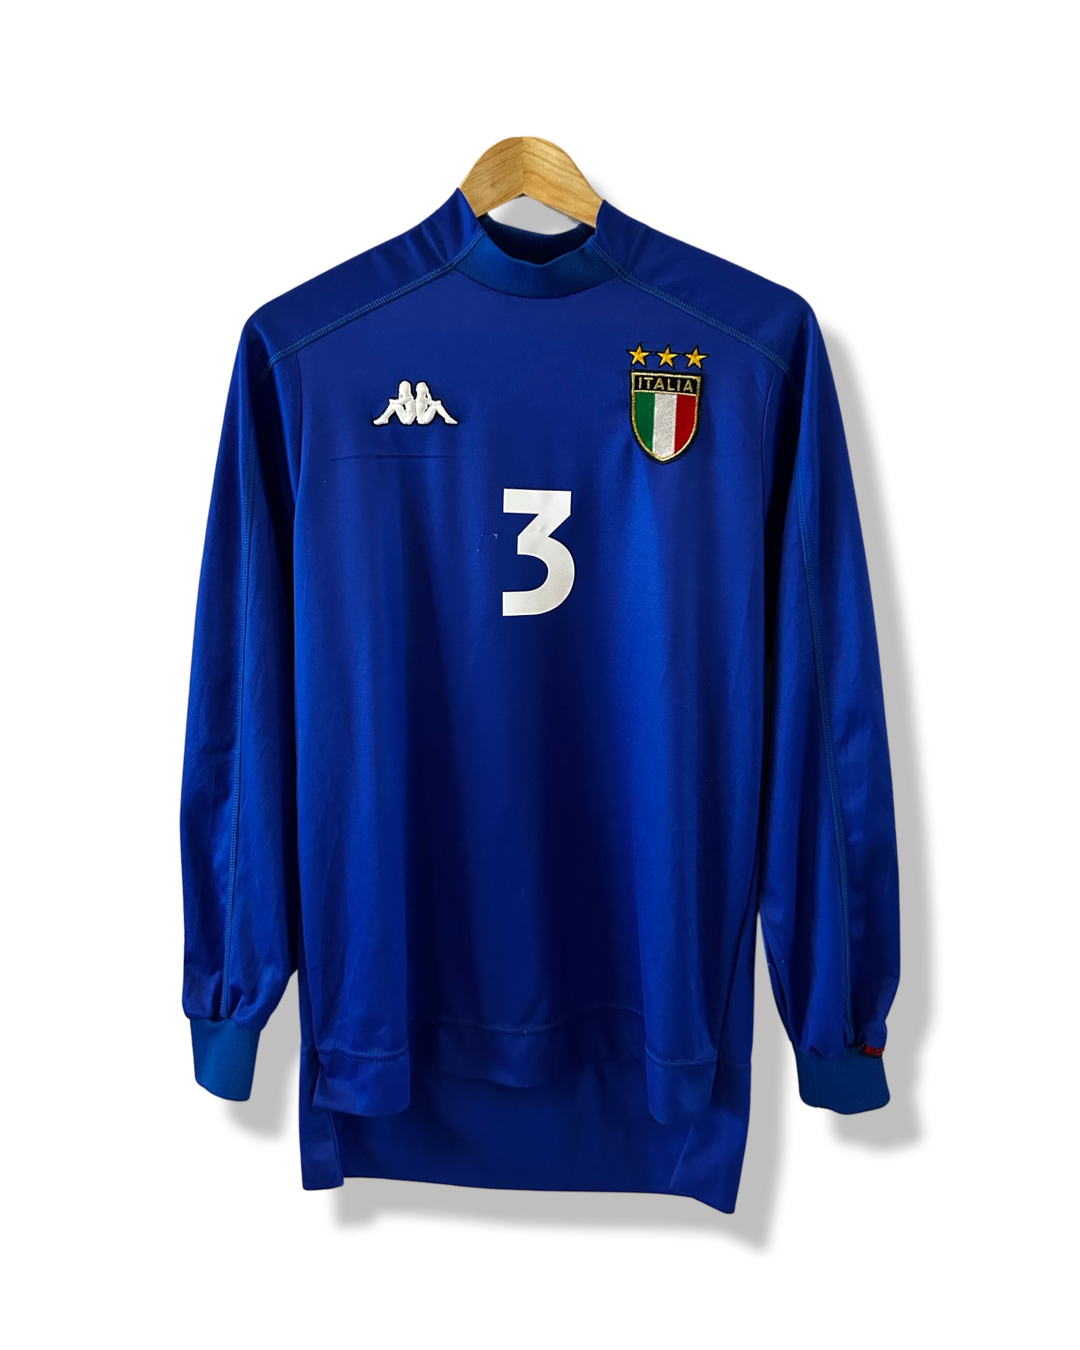 Italy National Football Team 1999-00 Home shirt, #3 Paolo Maldini - S